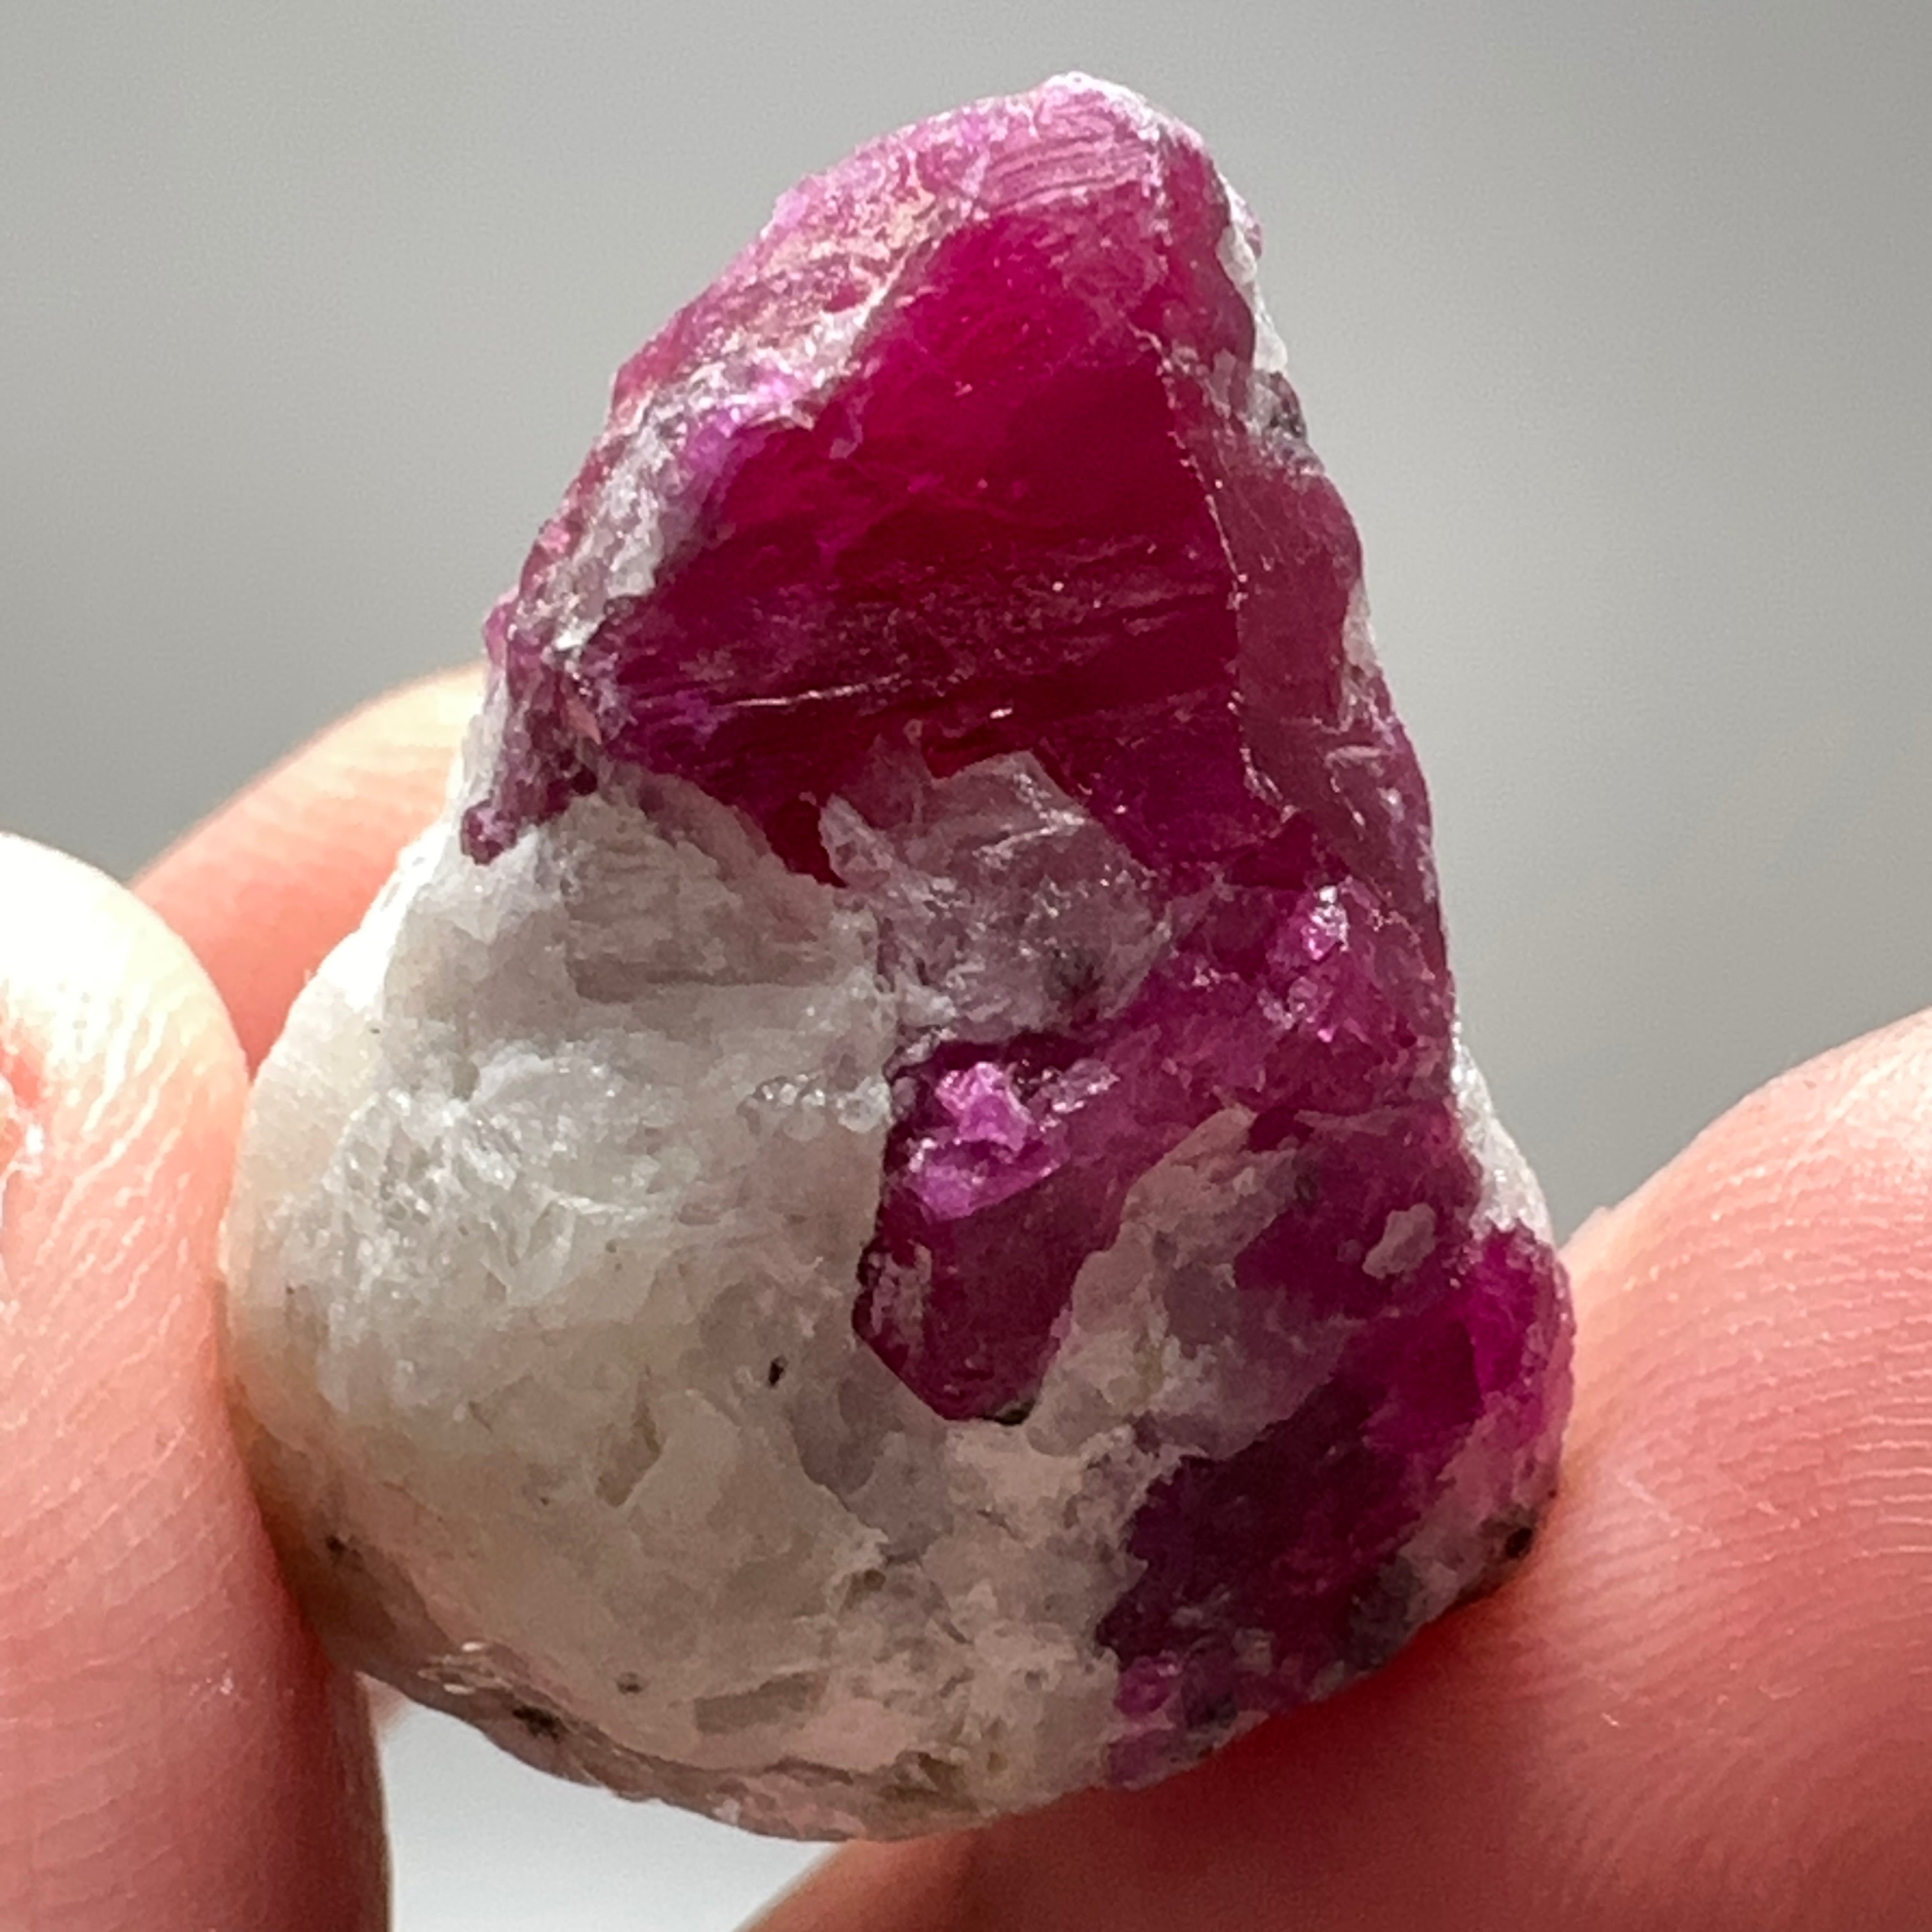 76.24ct Ruby on Matrix crystal with Pyrite, West Pokot, Kenya, Untreated Unheated. 2.88 x 2.27 x 1.89cm